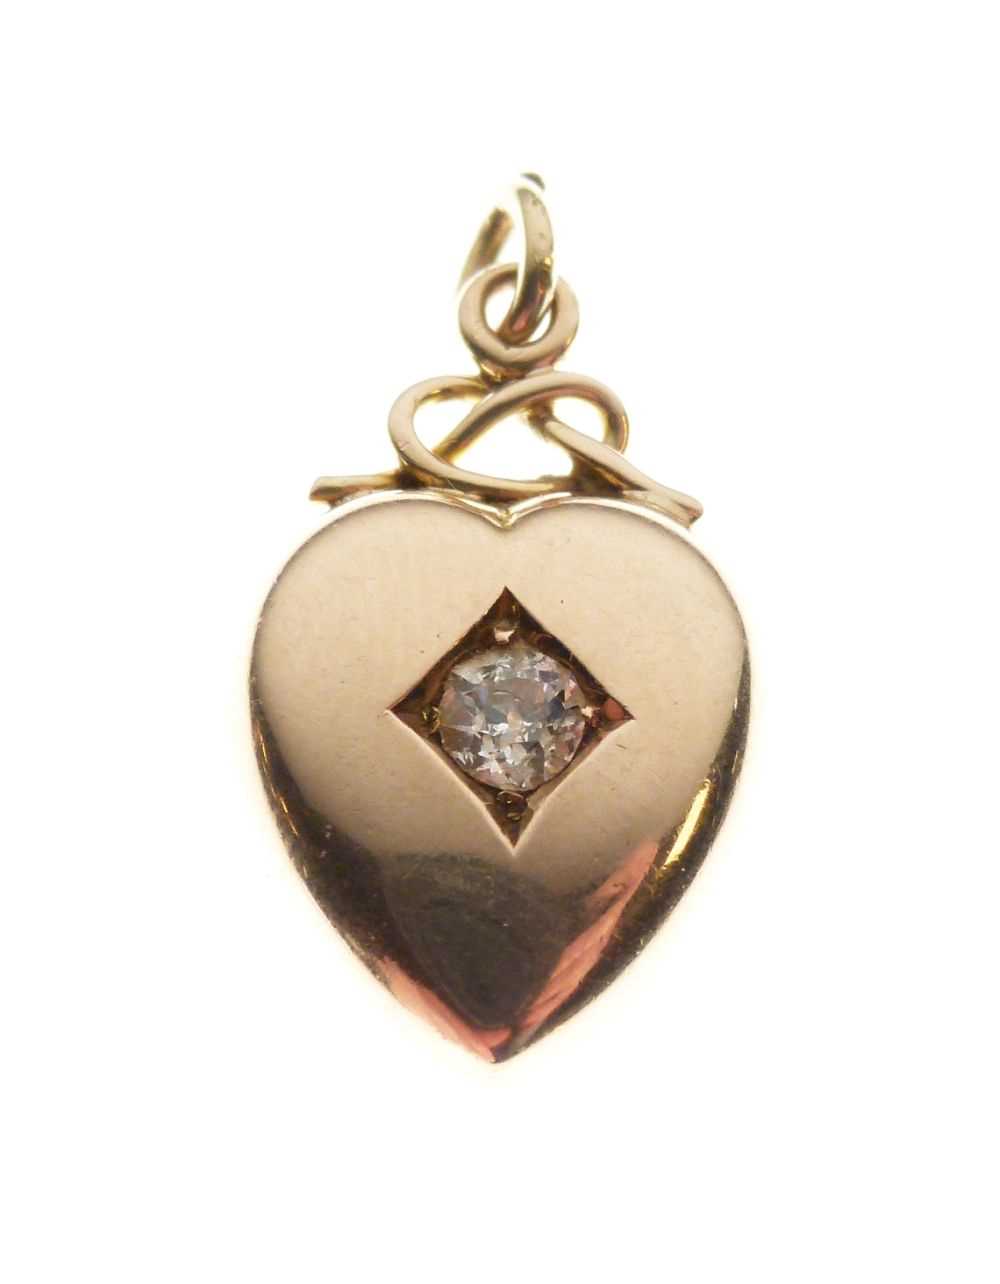 Yellow metal heart-pendant pendant